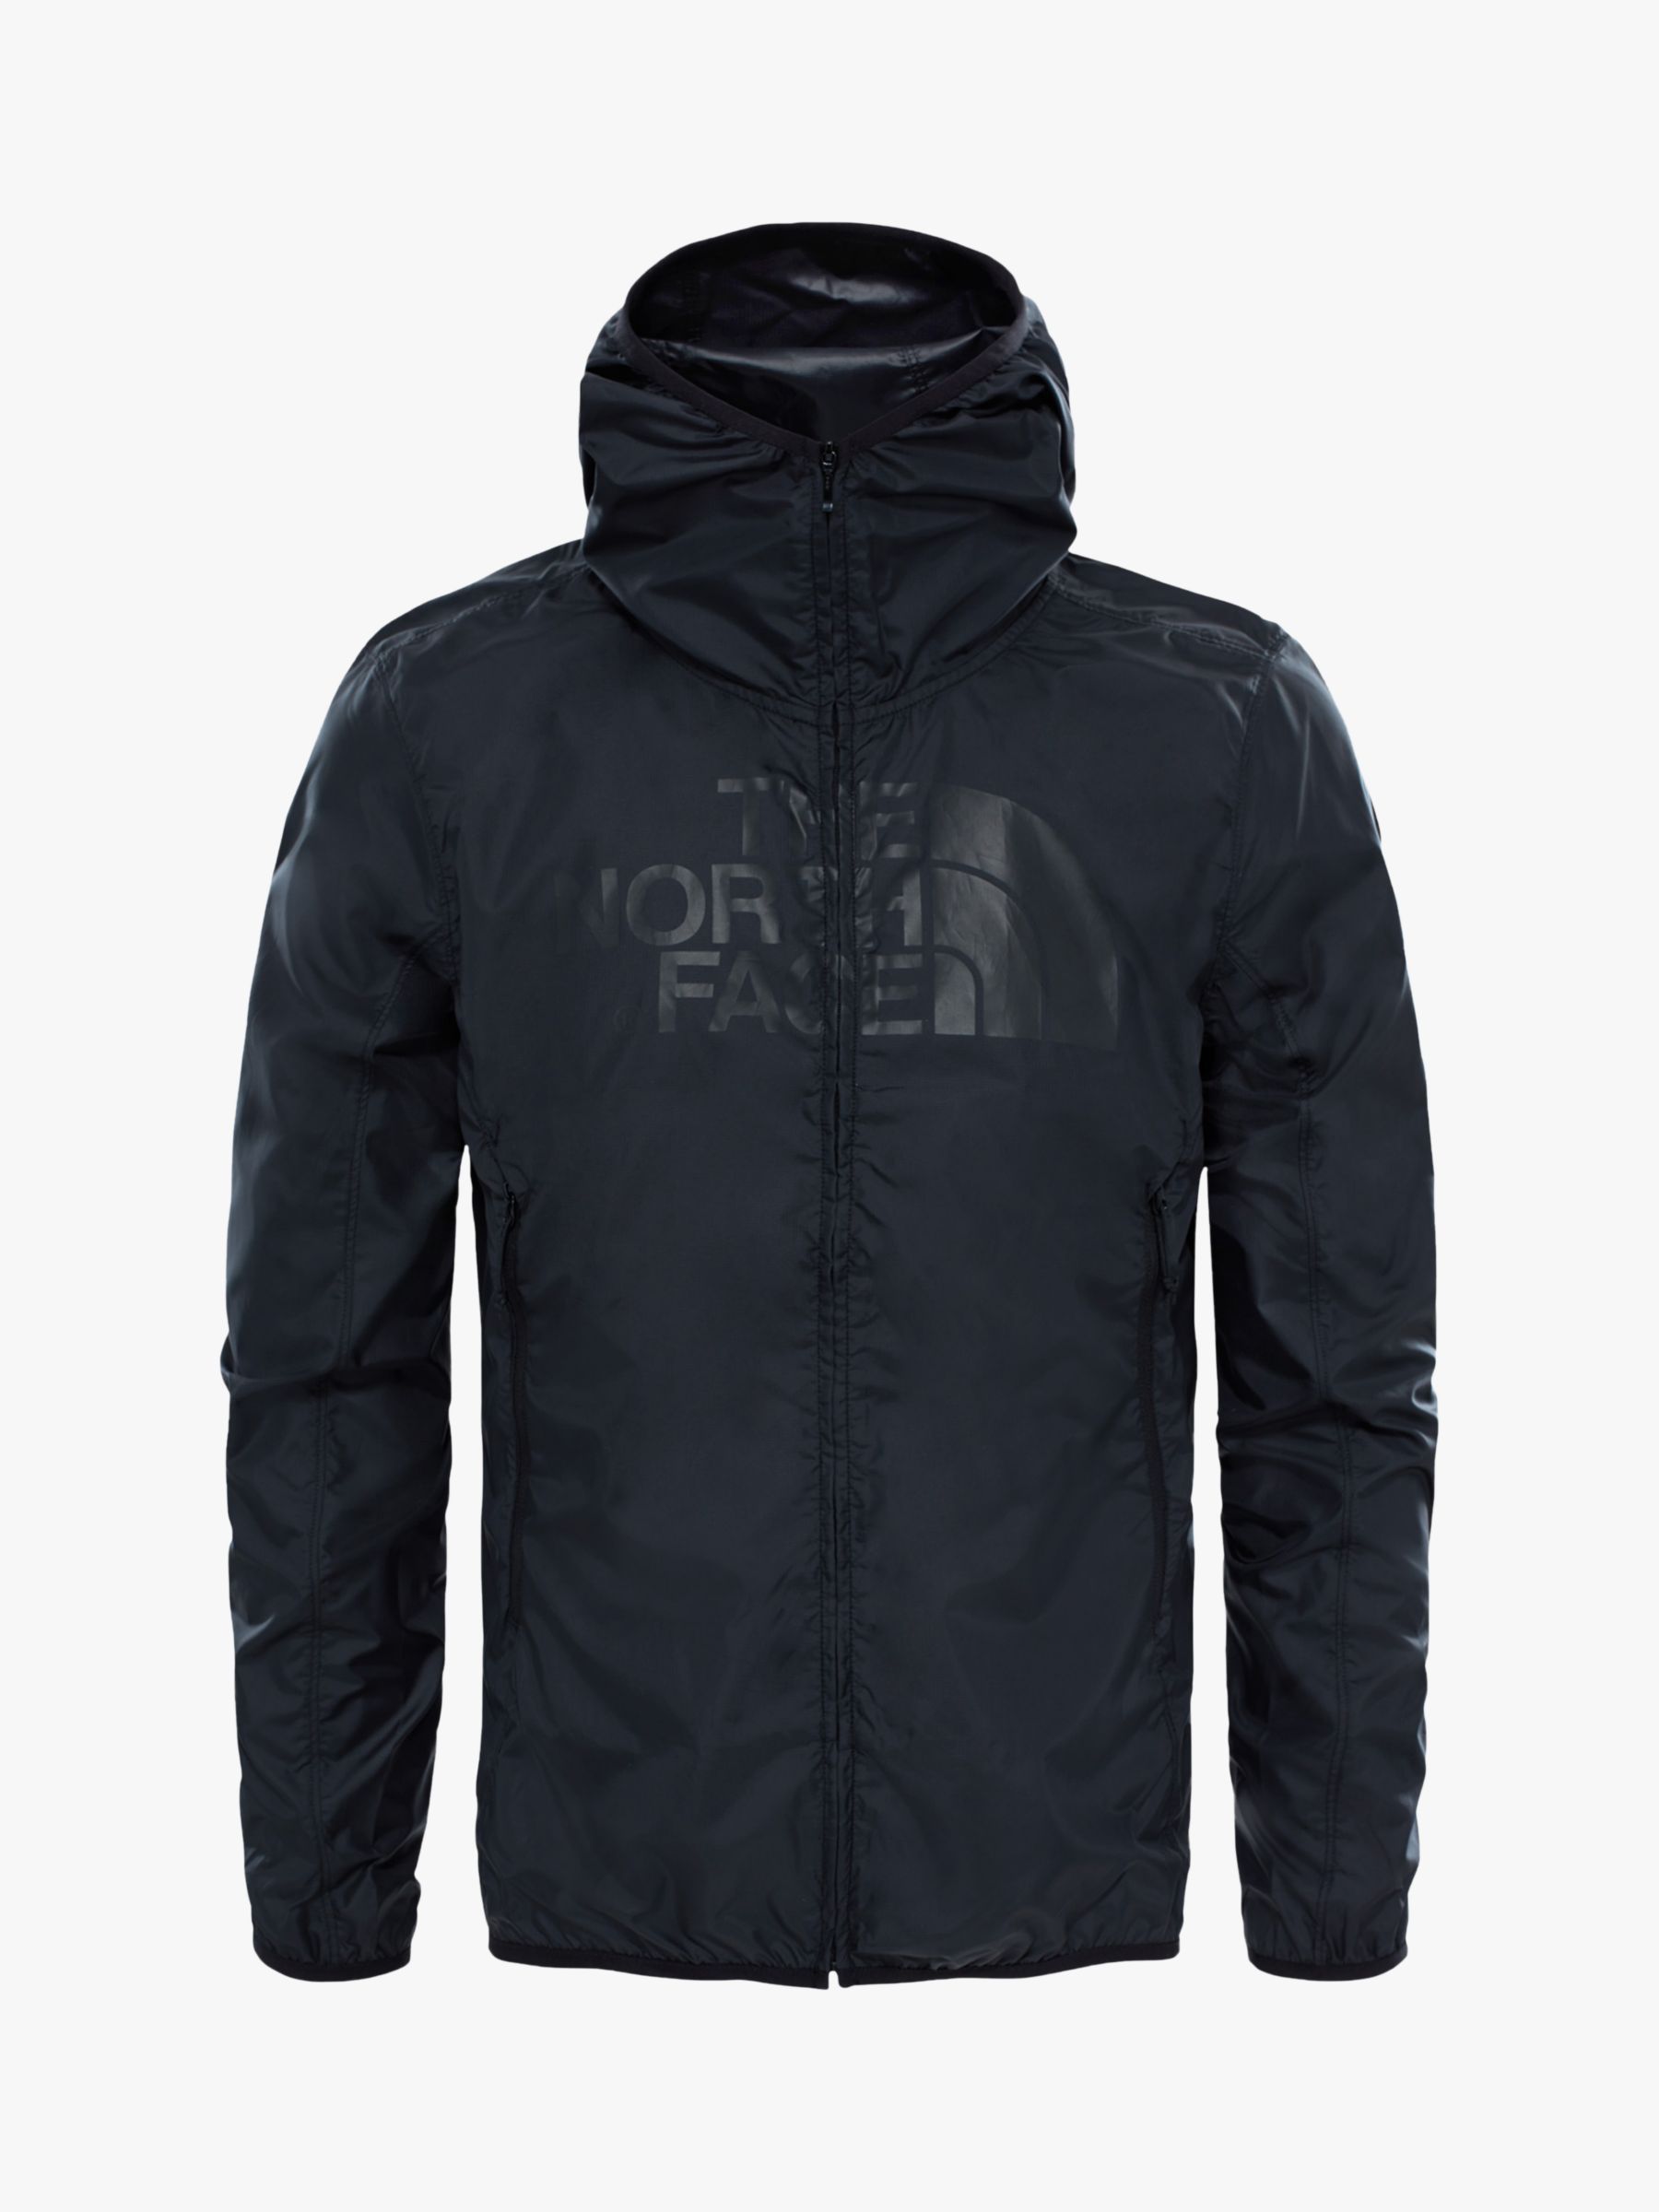 drew peak windwall jacket